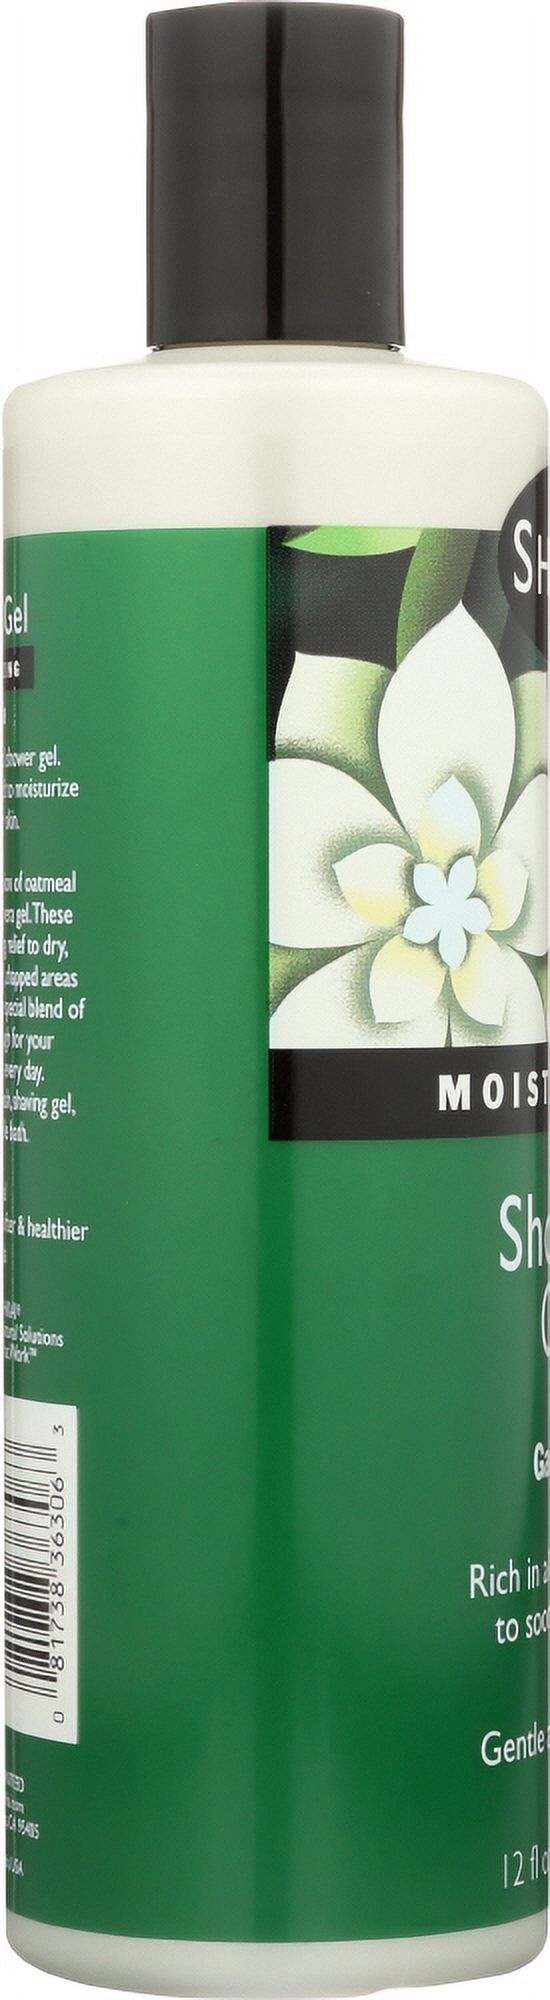 Shikai Moisturizing Shower Gel-Gardenia 12 oz Gel - image 2 of 3